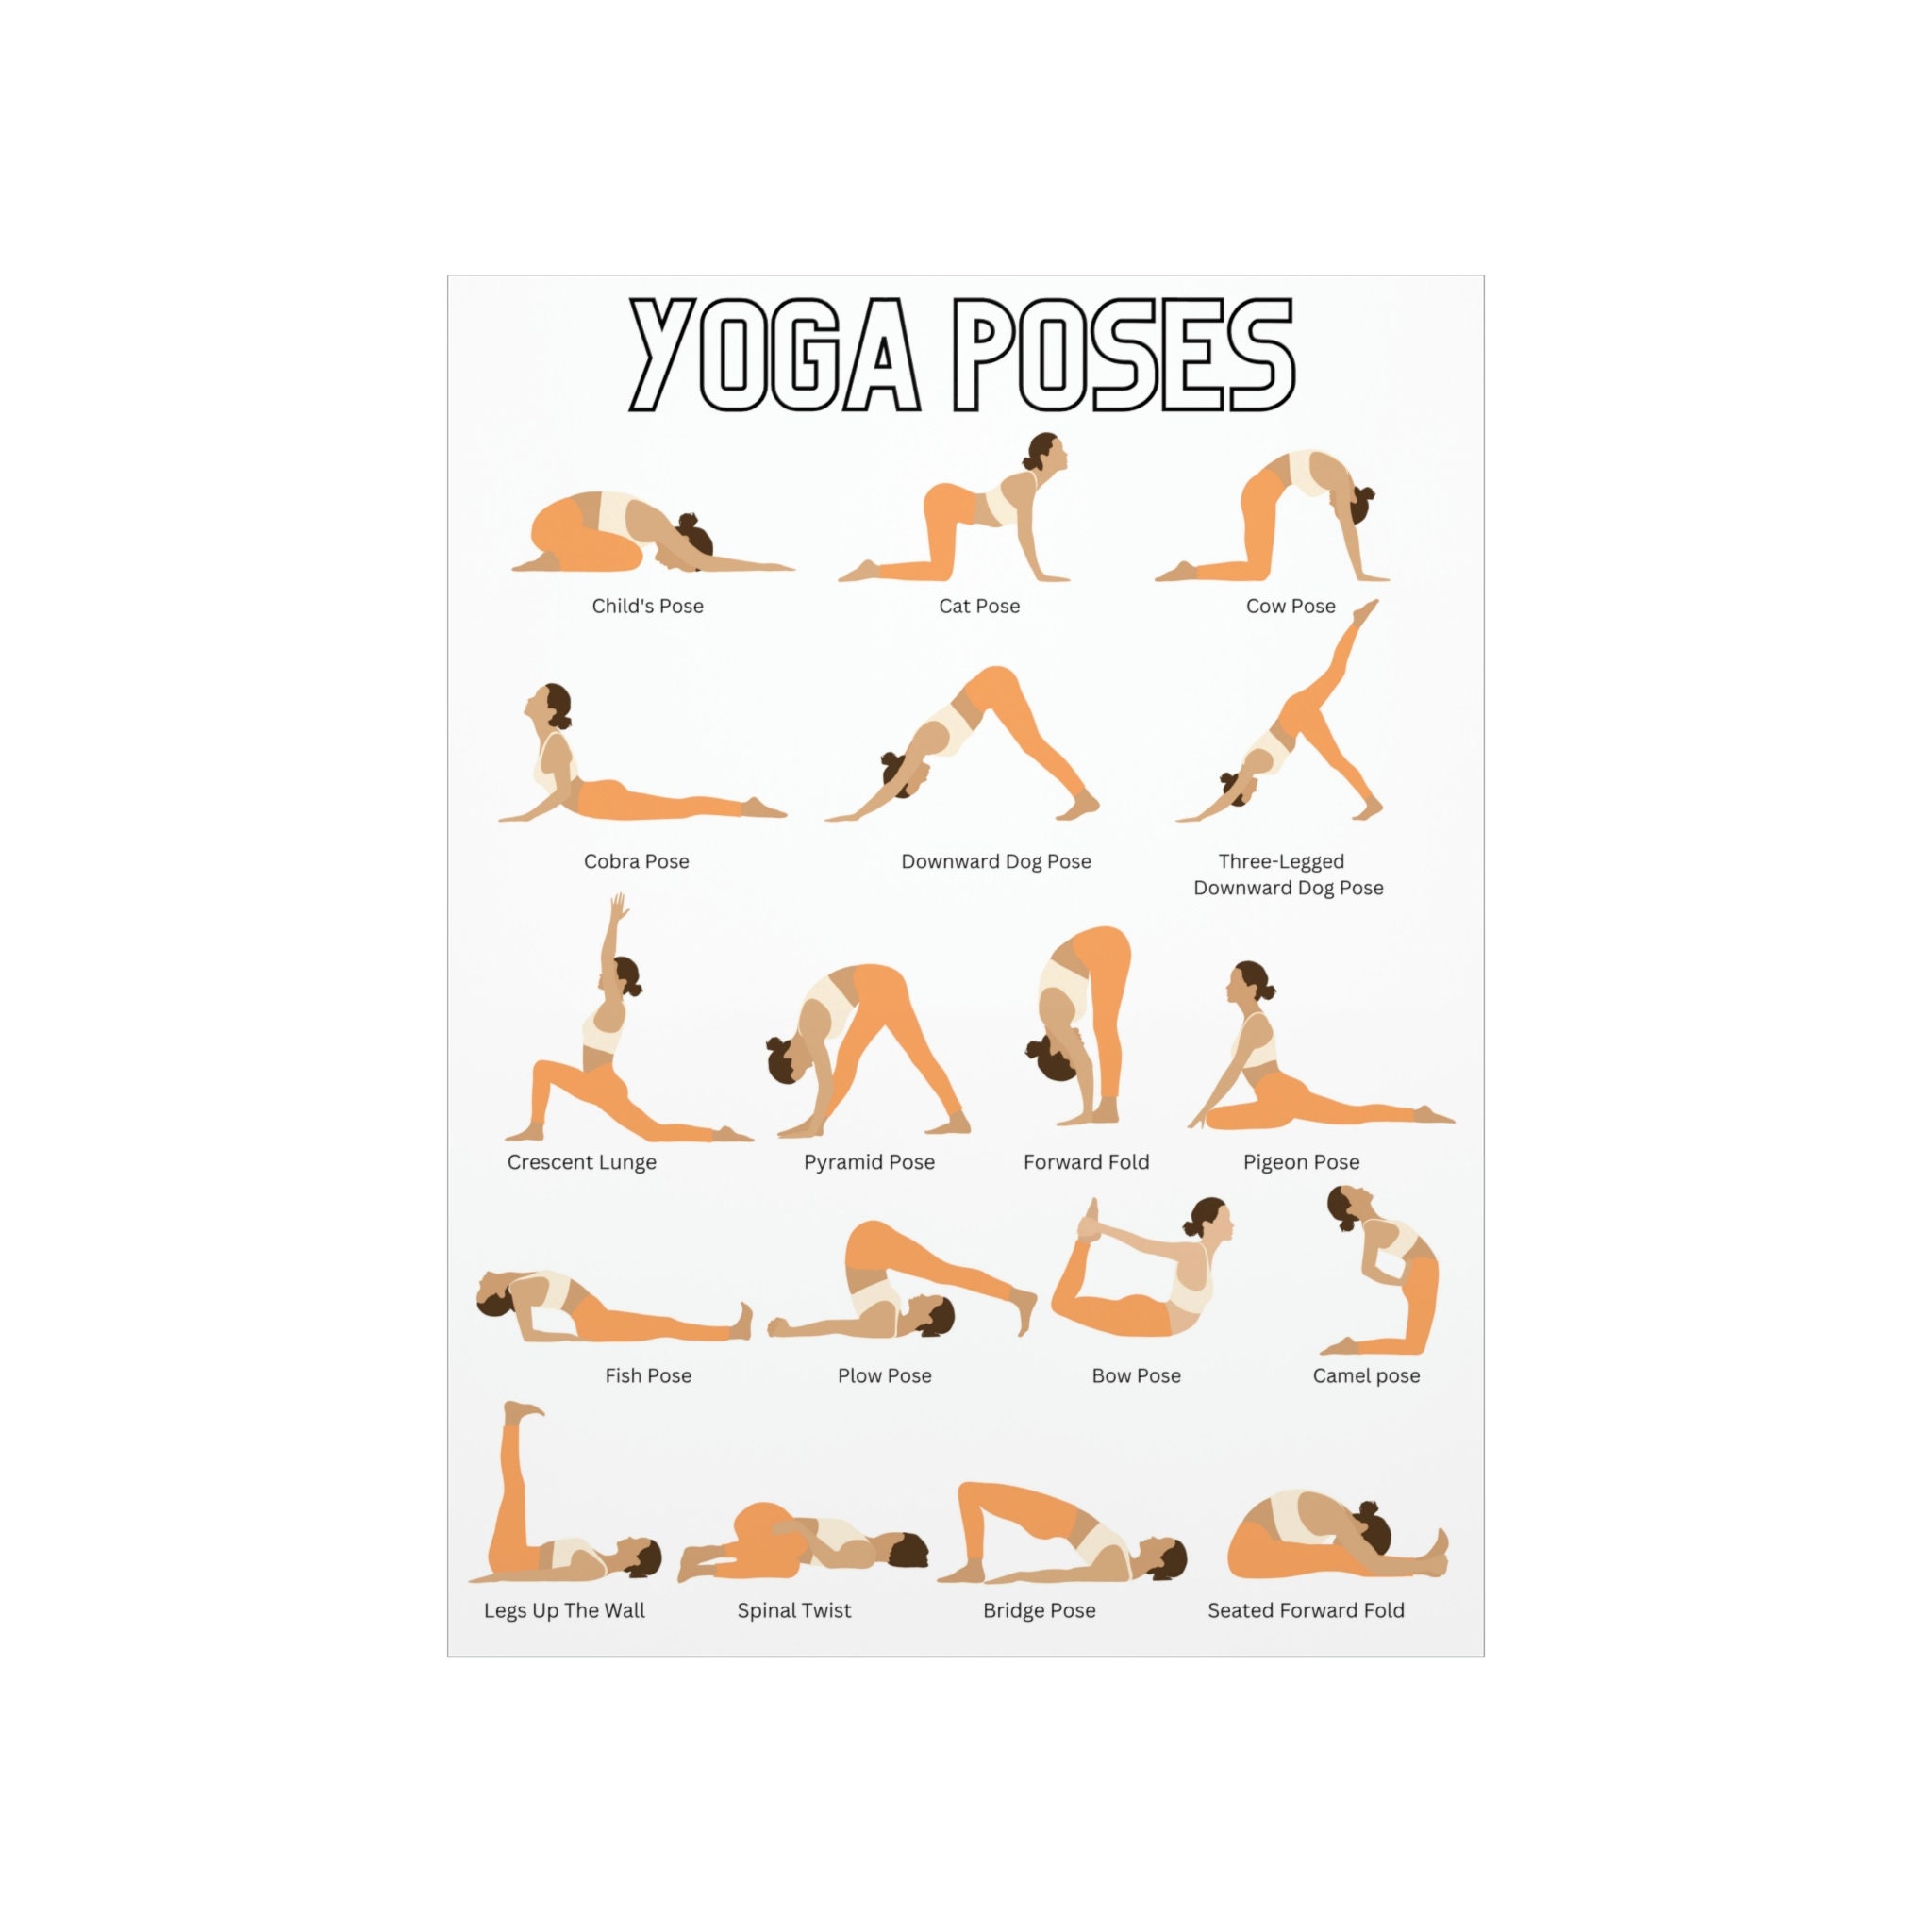 Yoga Backbends: List of Back Bending Poses, Benefits and Tips - Fitsri Yoga